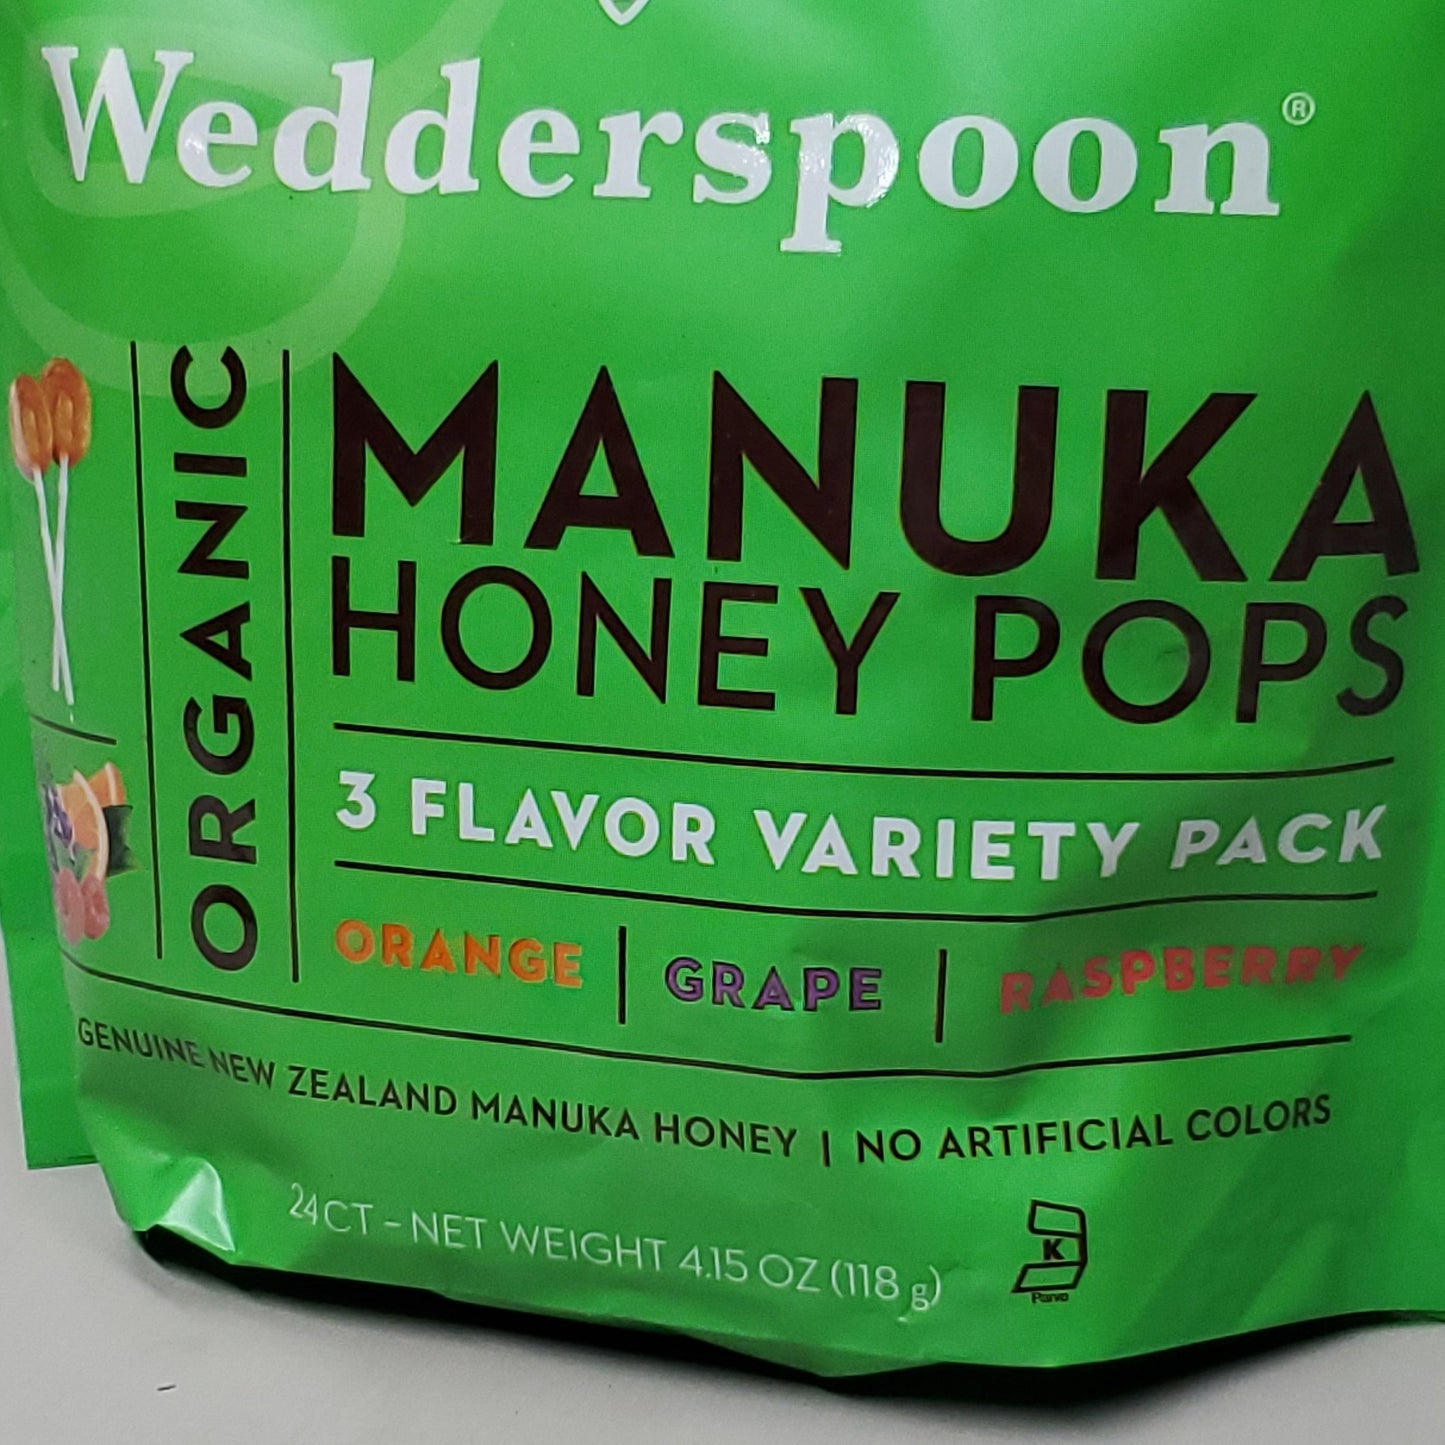 WEDDERSPOON Pack of 3 Organic Manuka Honey Pops 3 Flavor 24 CT 4.15 OZ Best By 12/23 (New)